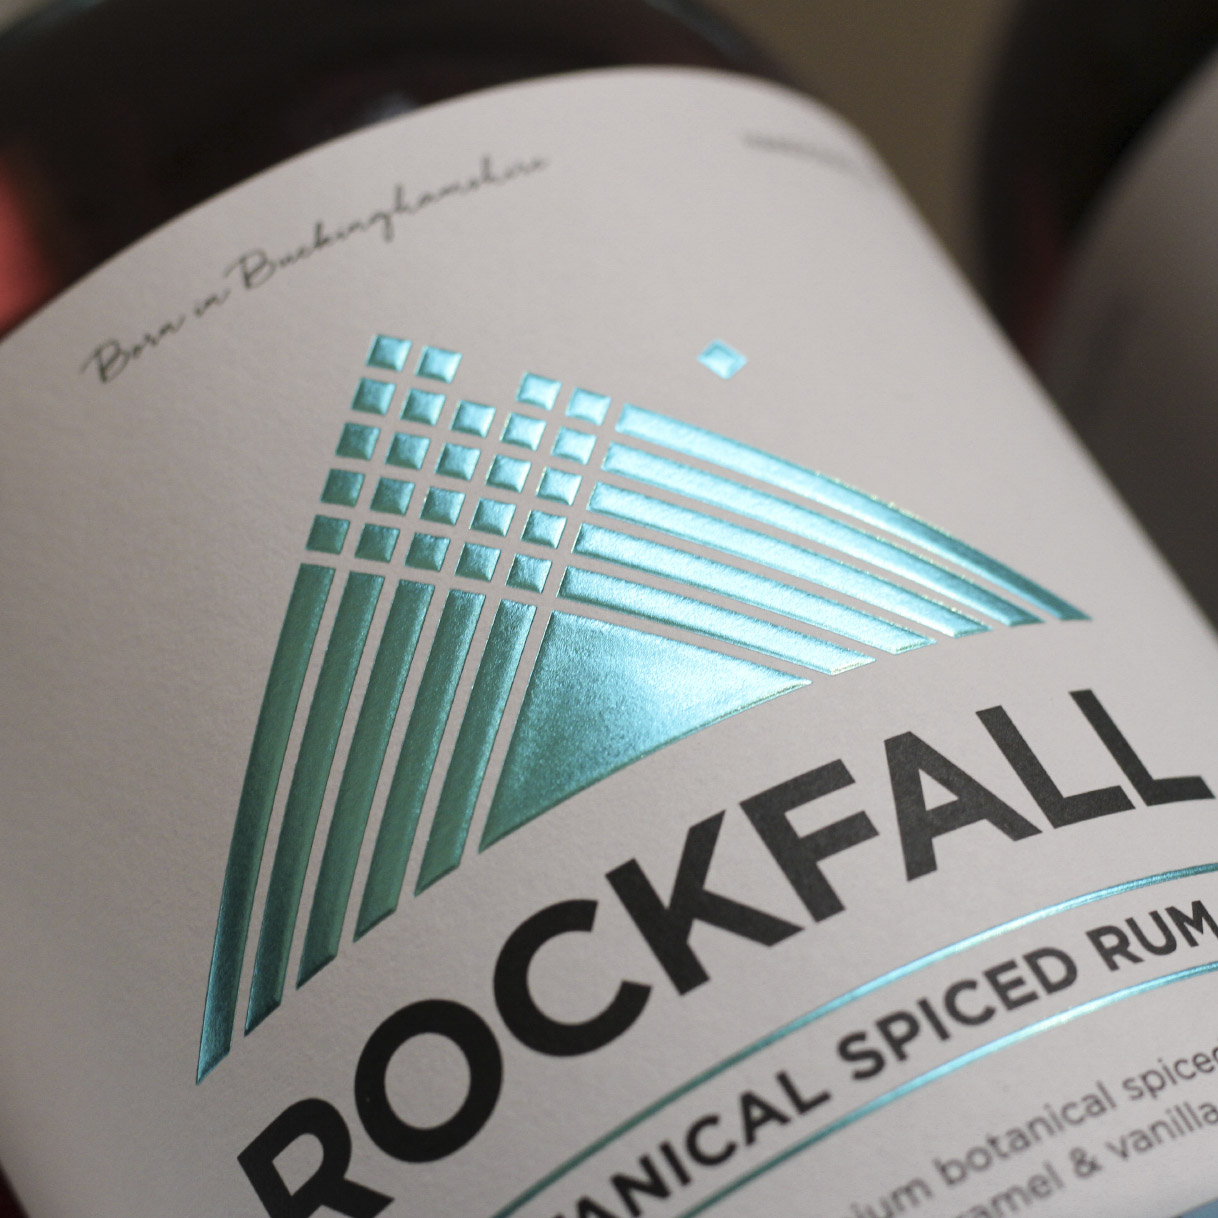 rockfall spiced rum close up logo